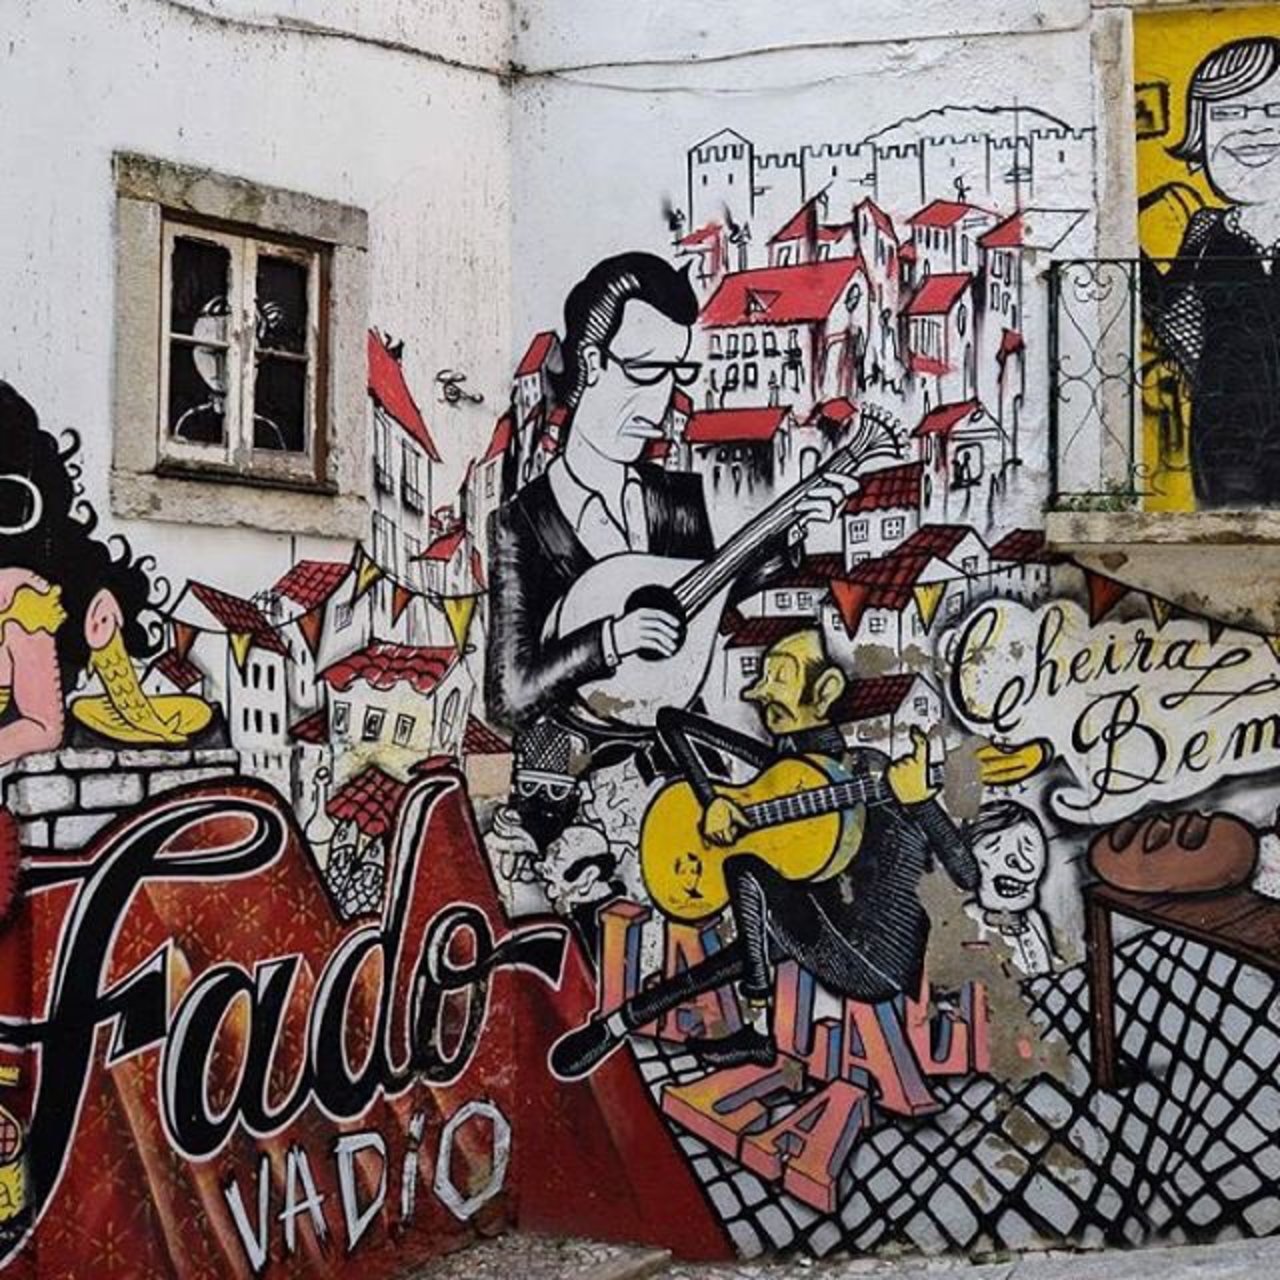 #customise a wall with #switch #streetart in #Portugal #graffiti #arte #art #bedifferent https://t.co/0REniEUn8G